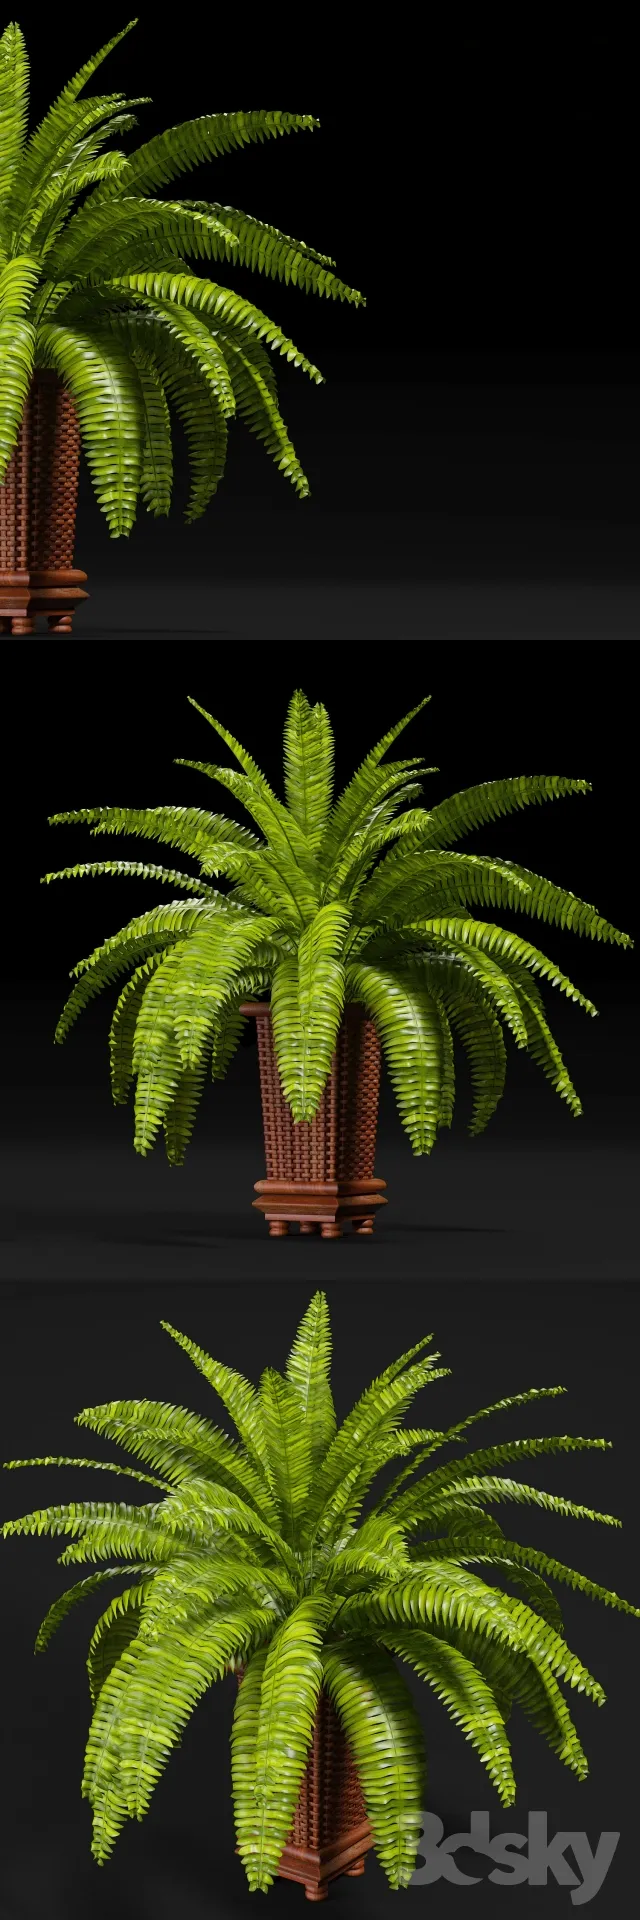 FLOWER – PLANT 3D MODELS – 499